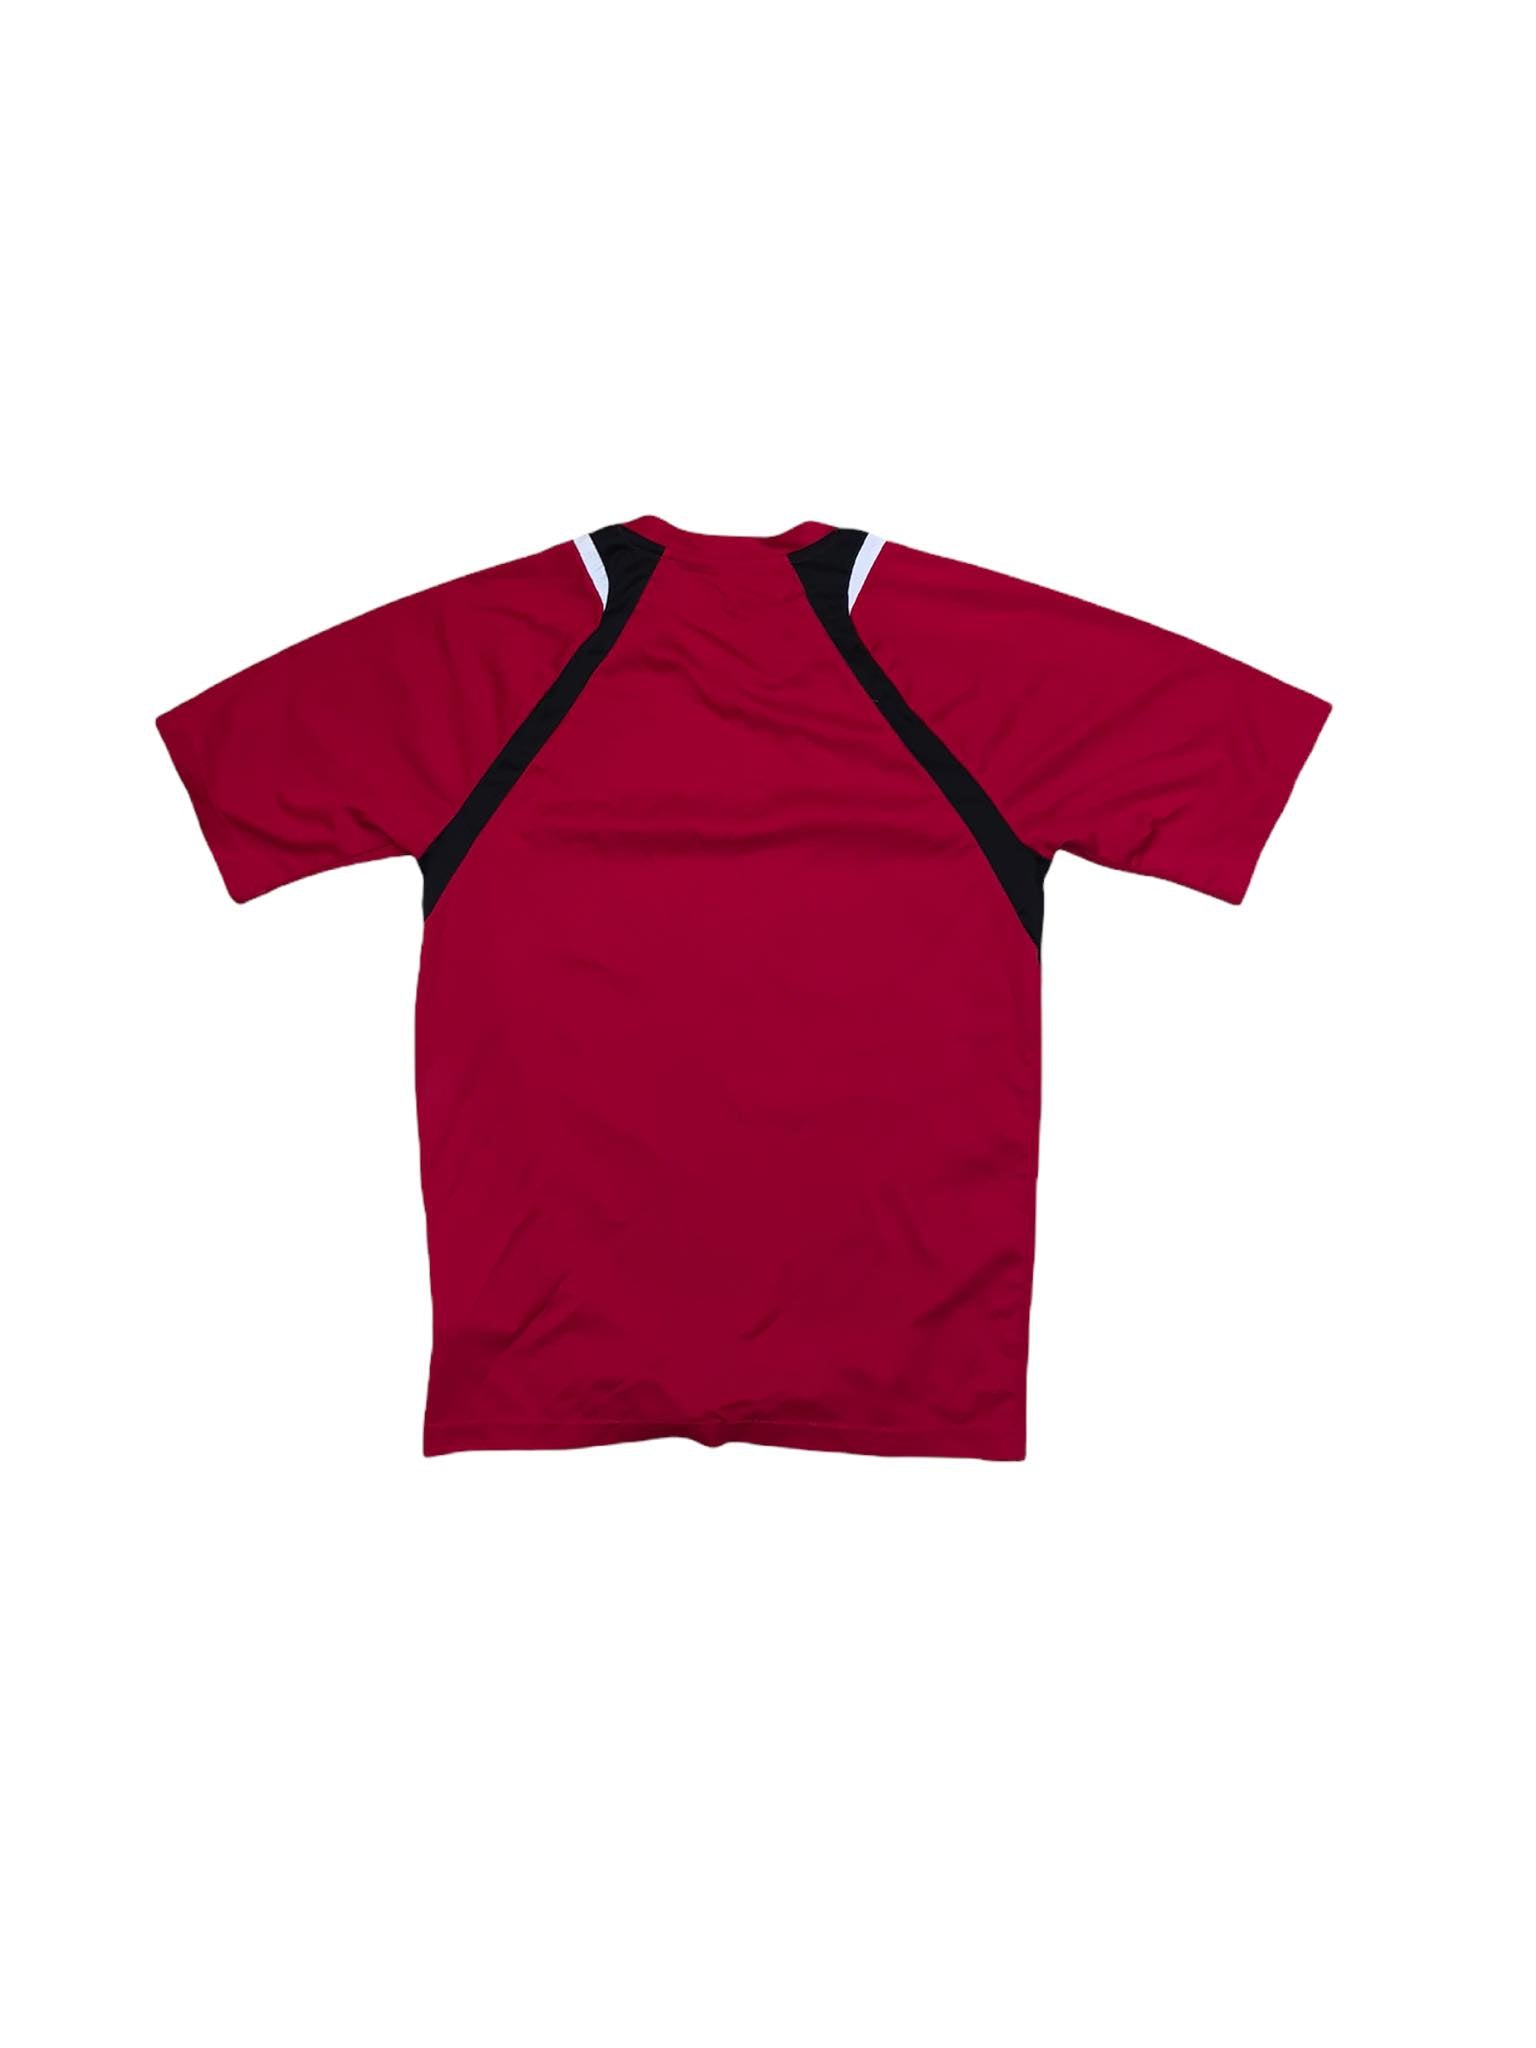 Nurnberg Training Shirt (S) - KITLAUNCH